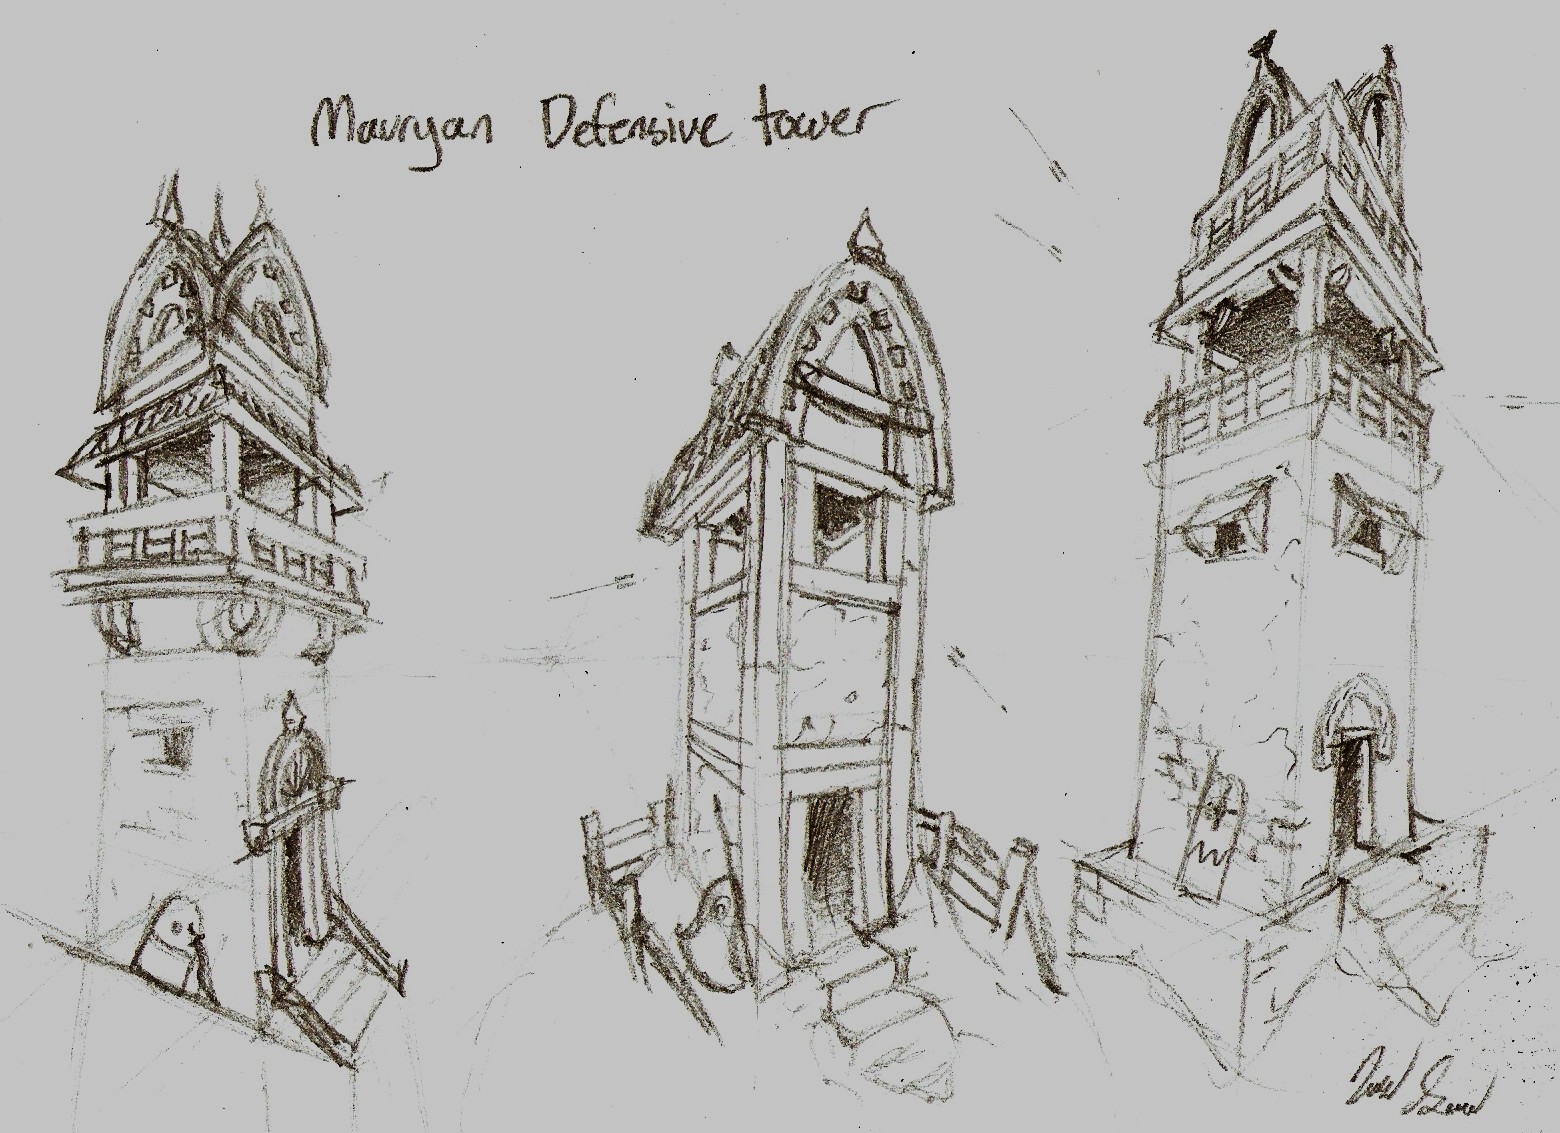 mauryan_defensive_tower_sketch_by_lordgood-d5ss8xj.jpg